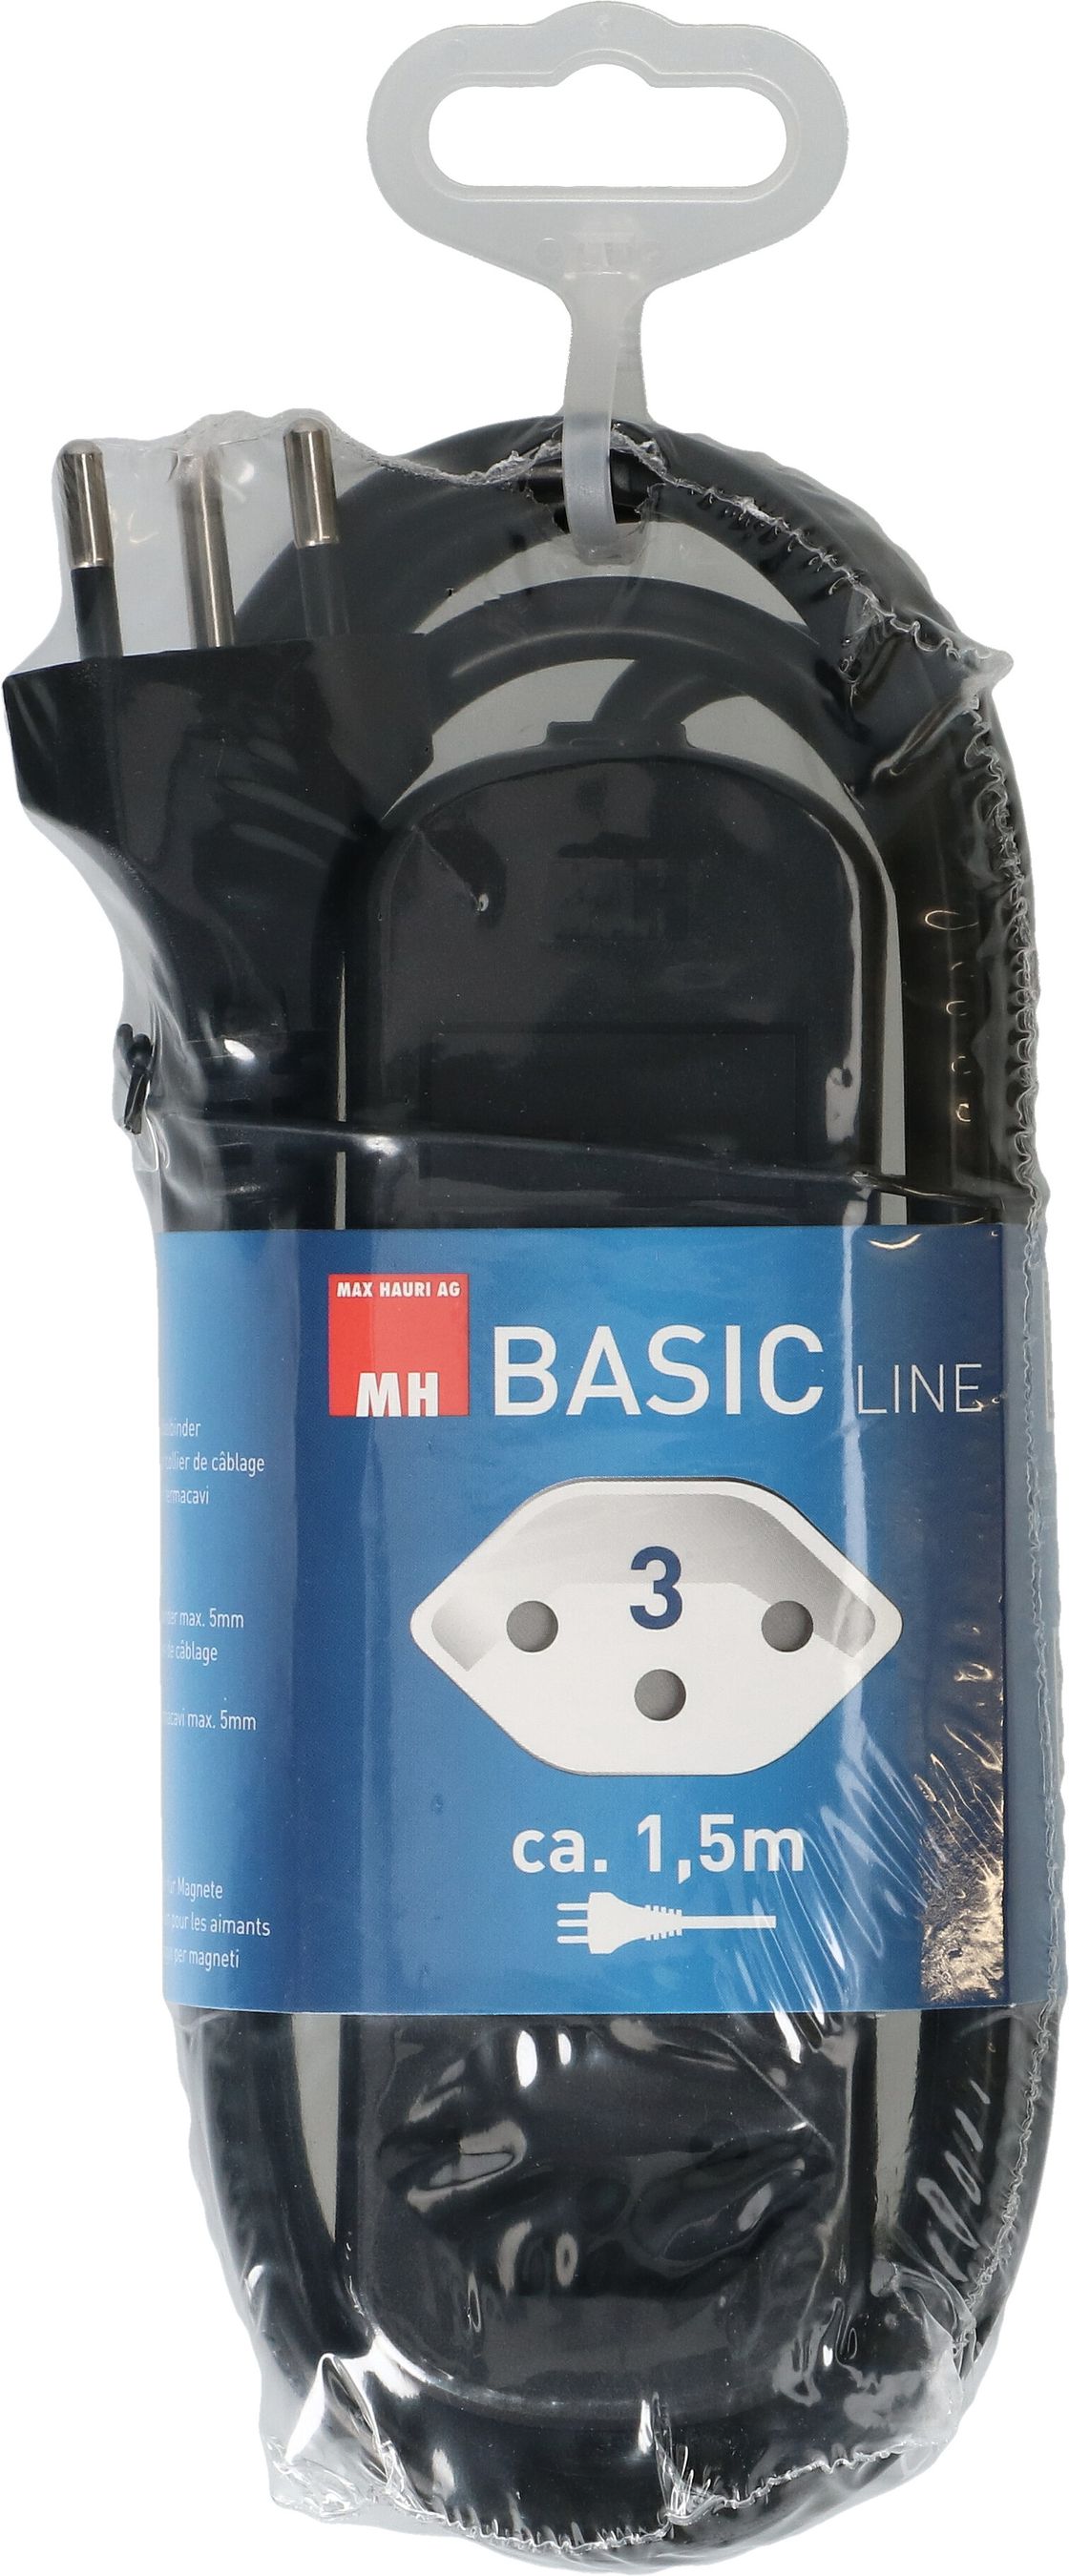 Steckdosenleiste Basic Line 3x Typ 13 schwarz 1.5m